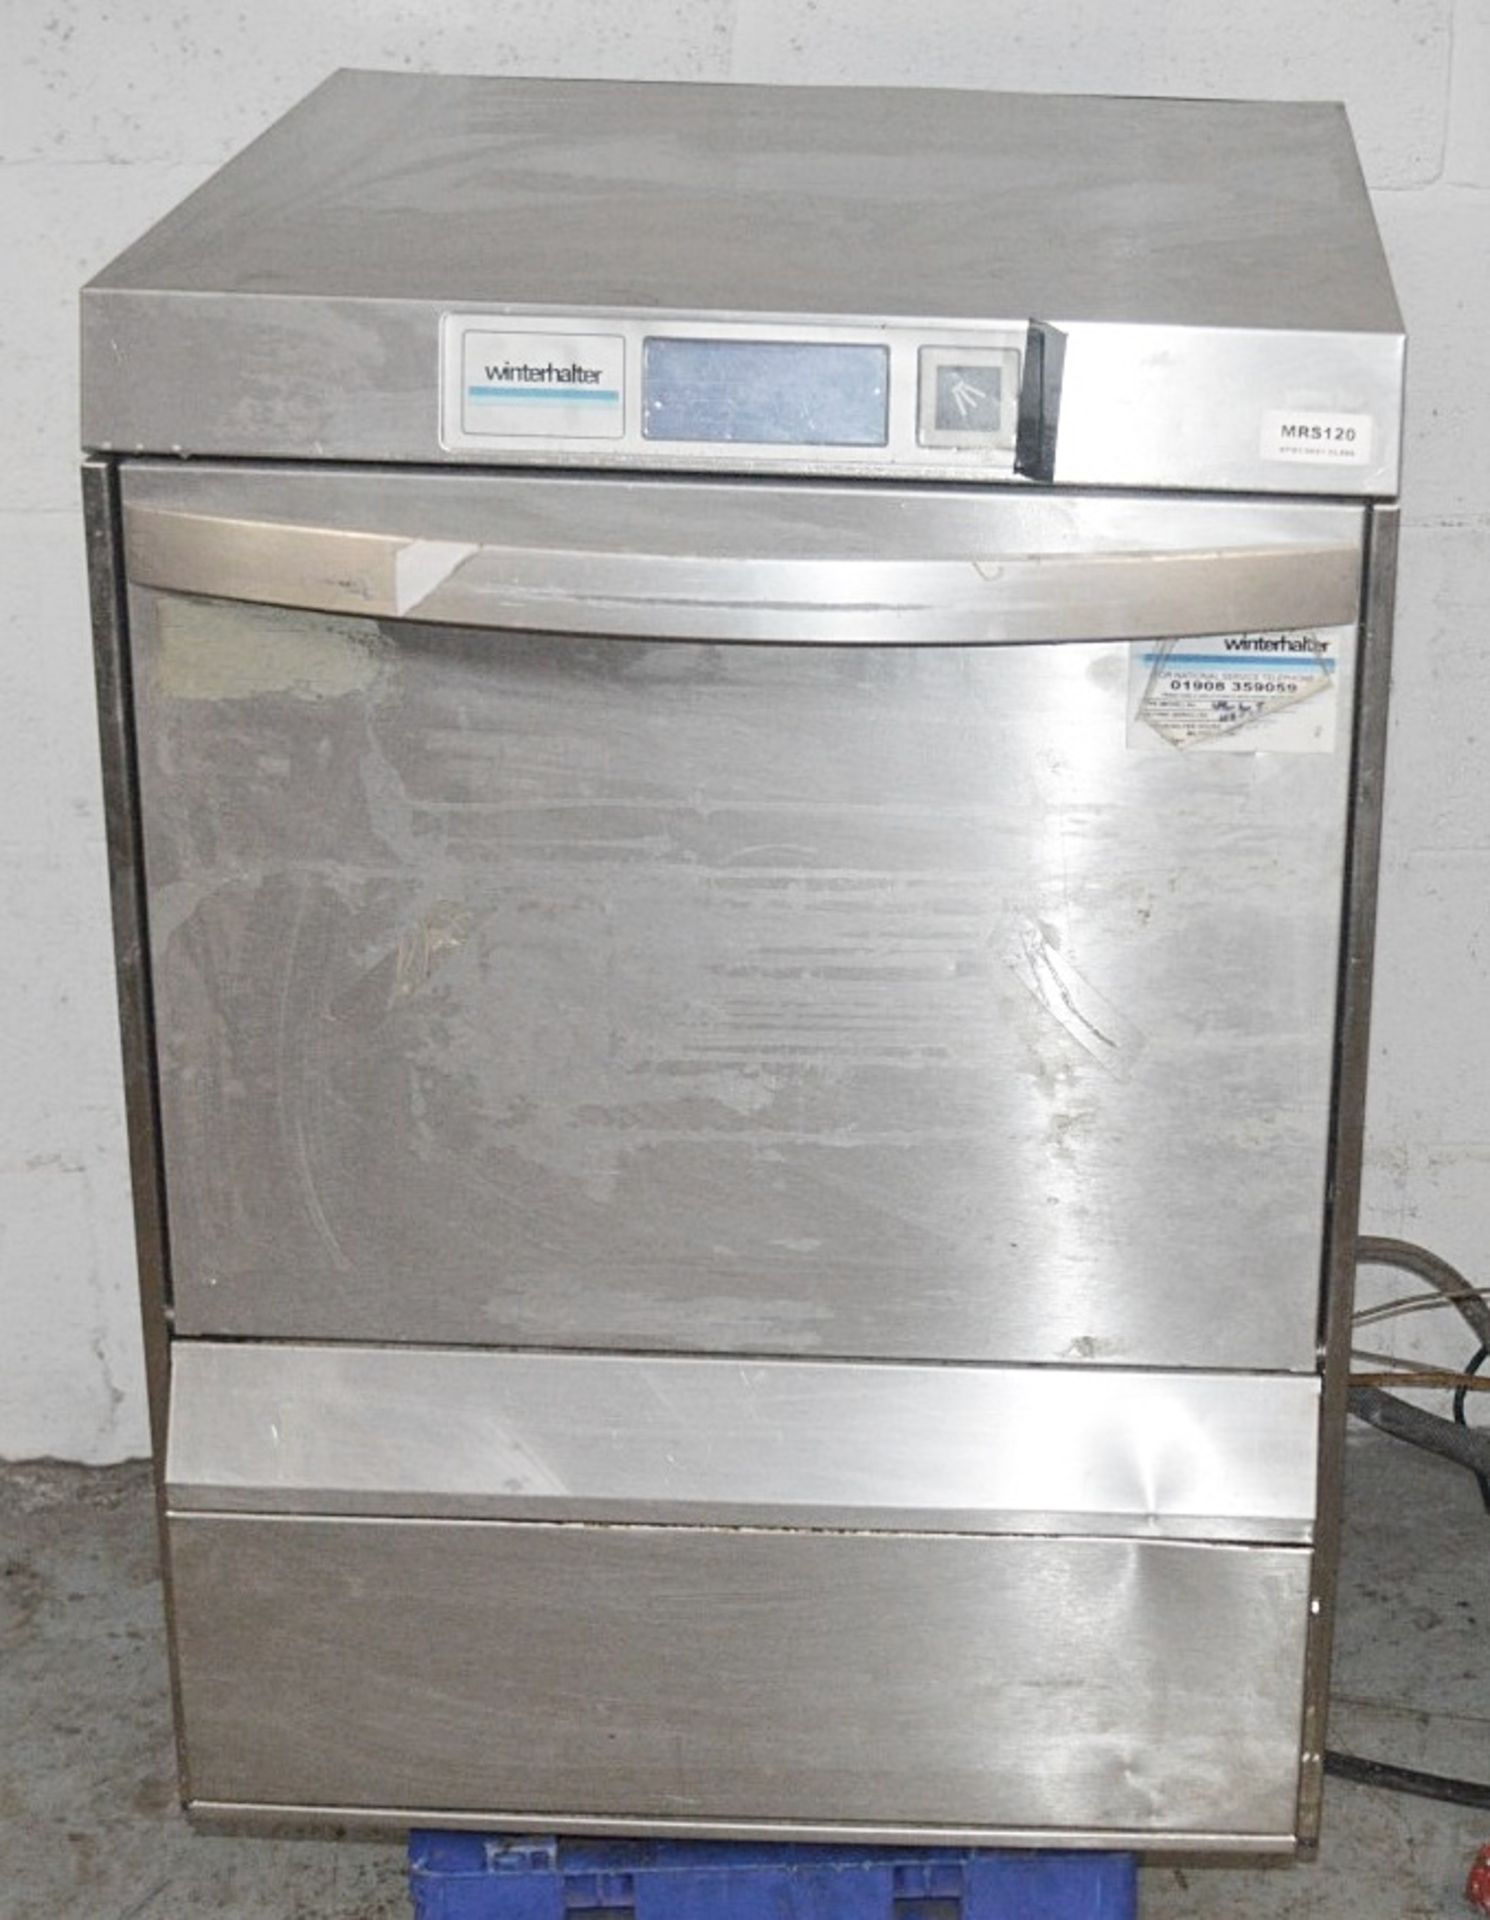 1 x Winterhalter UC-L Undercounter Commercial Kitchen Dishwasher - Dimensions: H102 x W60 x